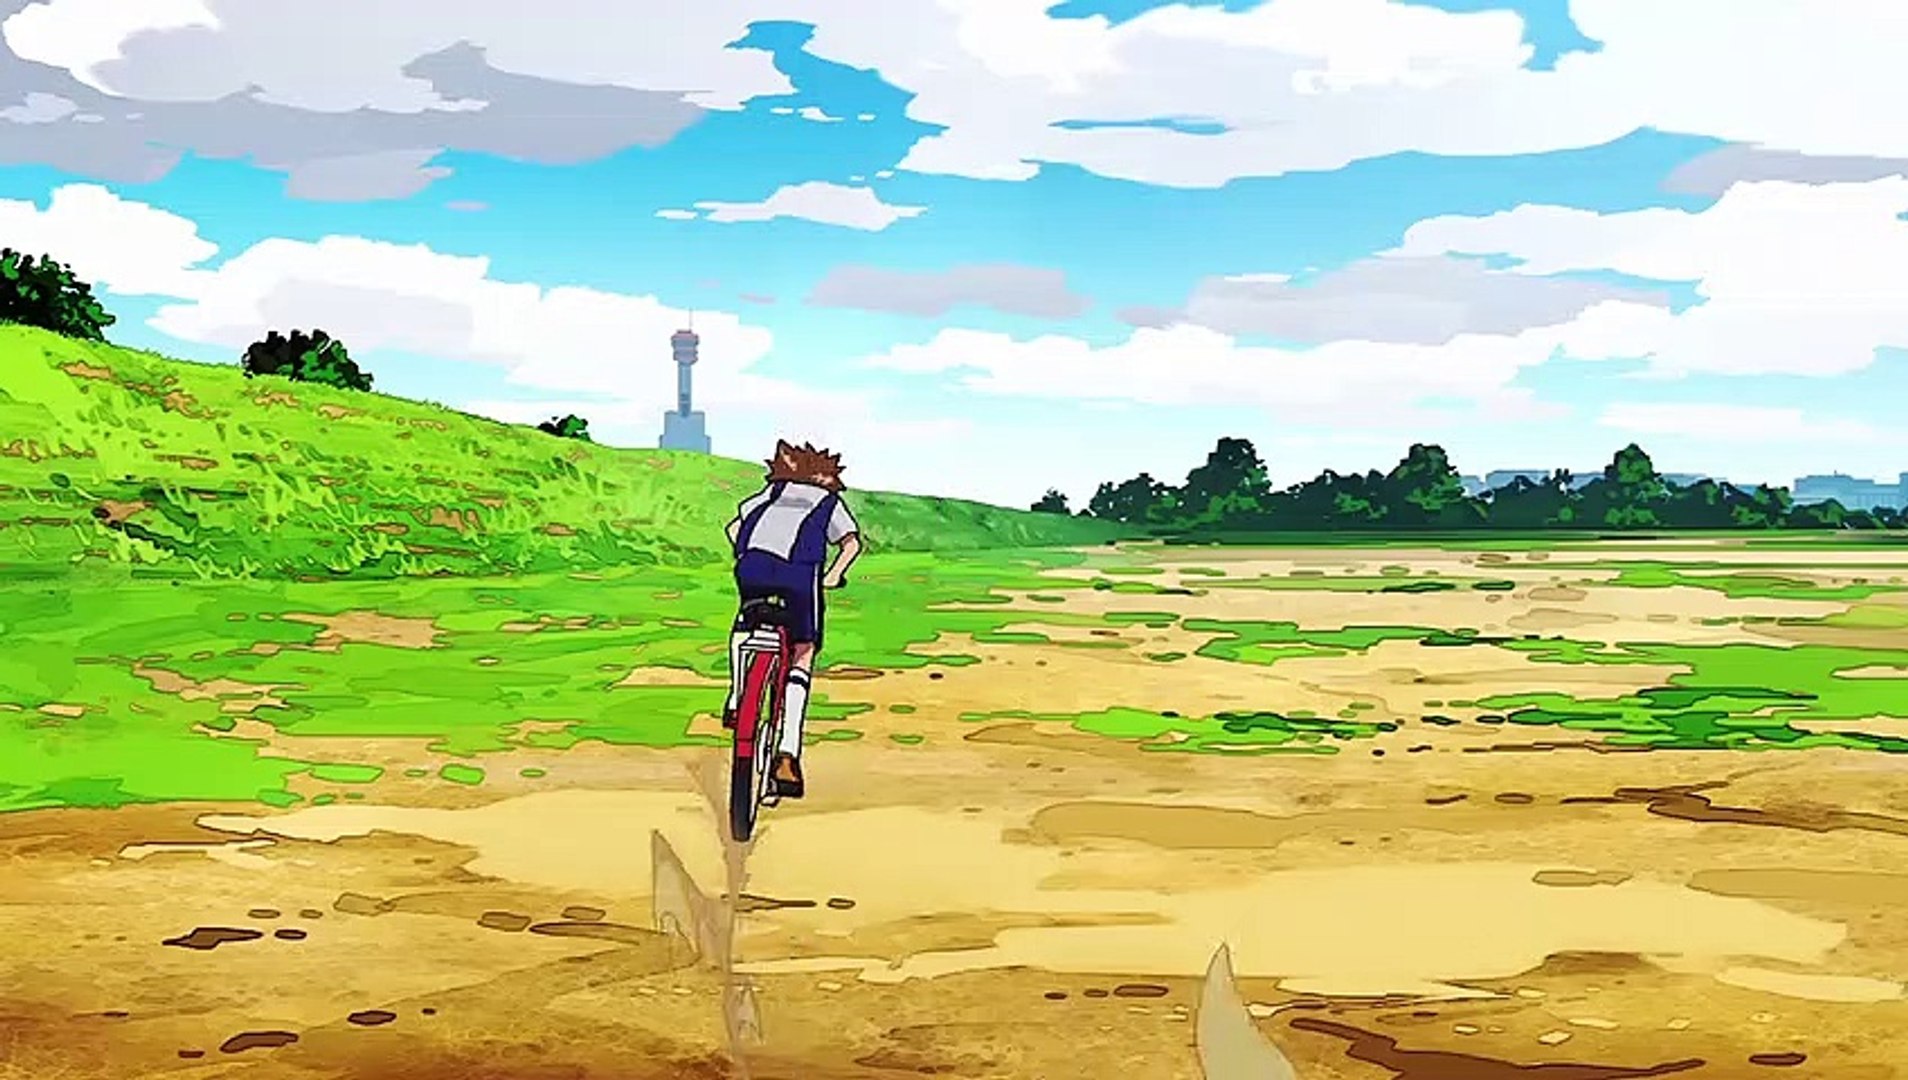 Digimon Adventure tri. Ketsui Anime Review